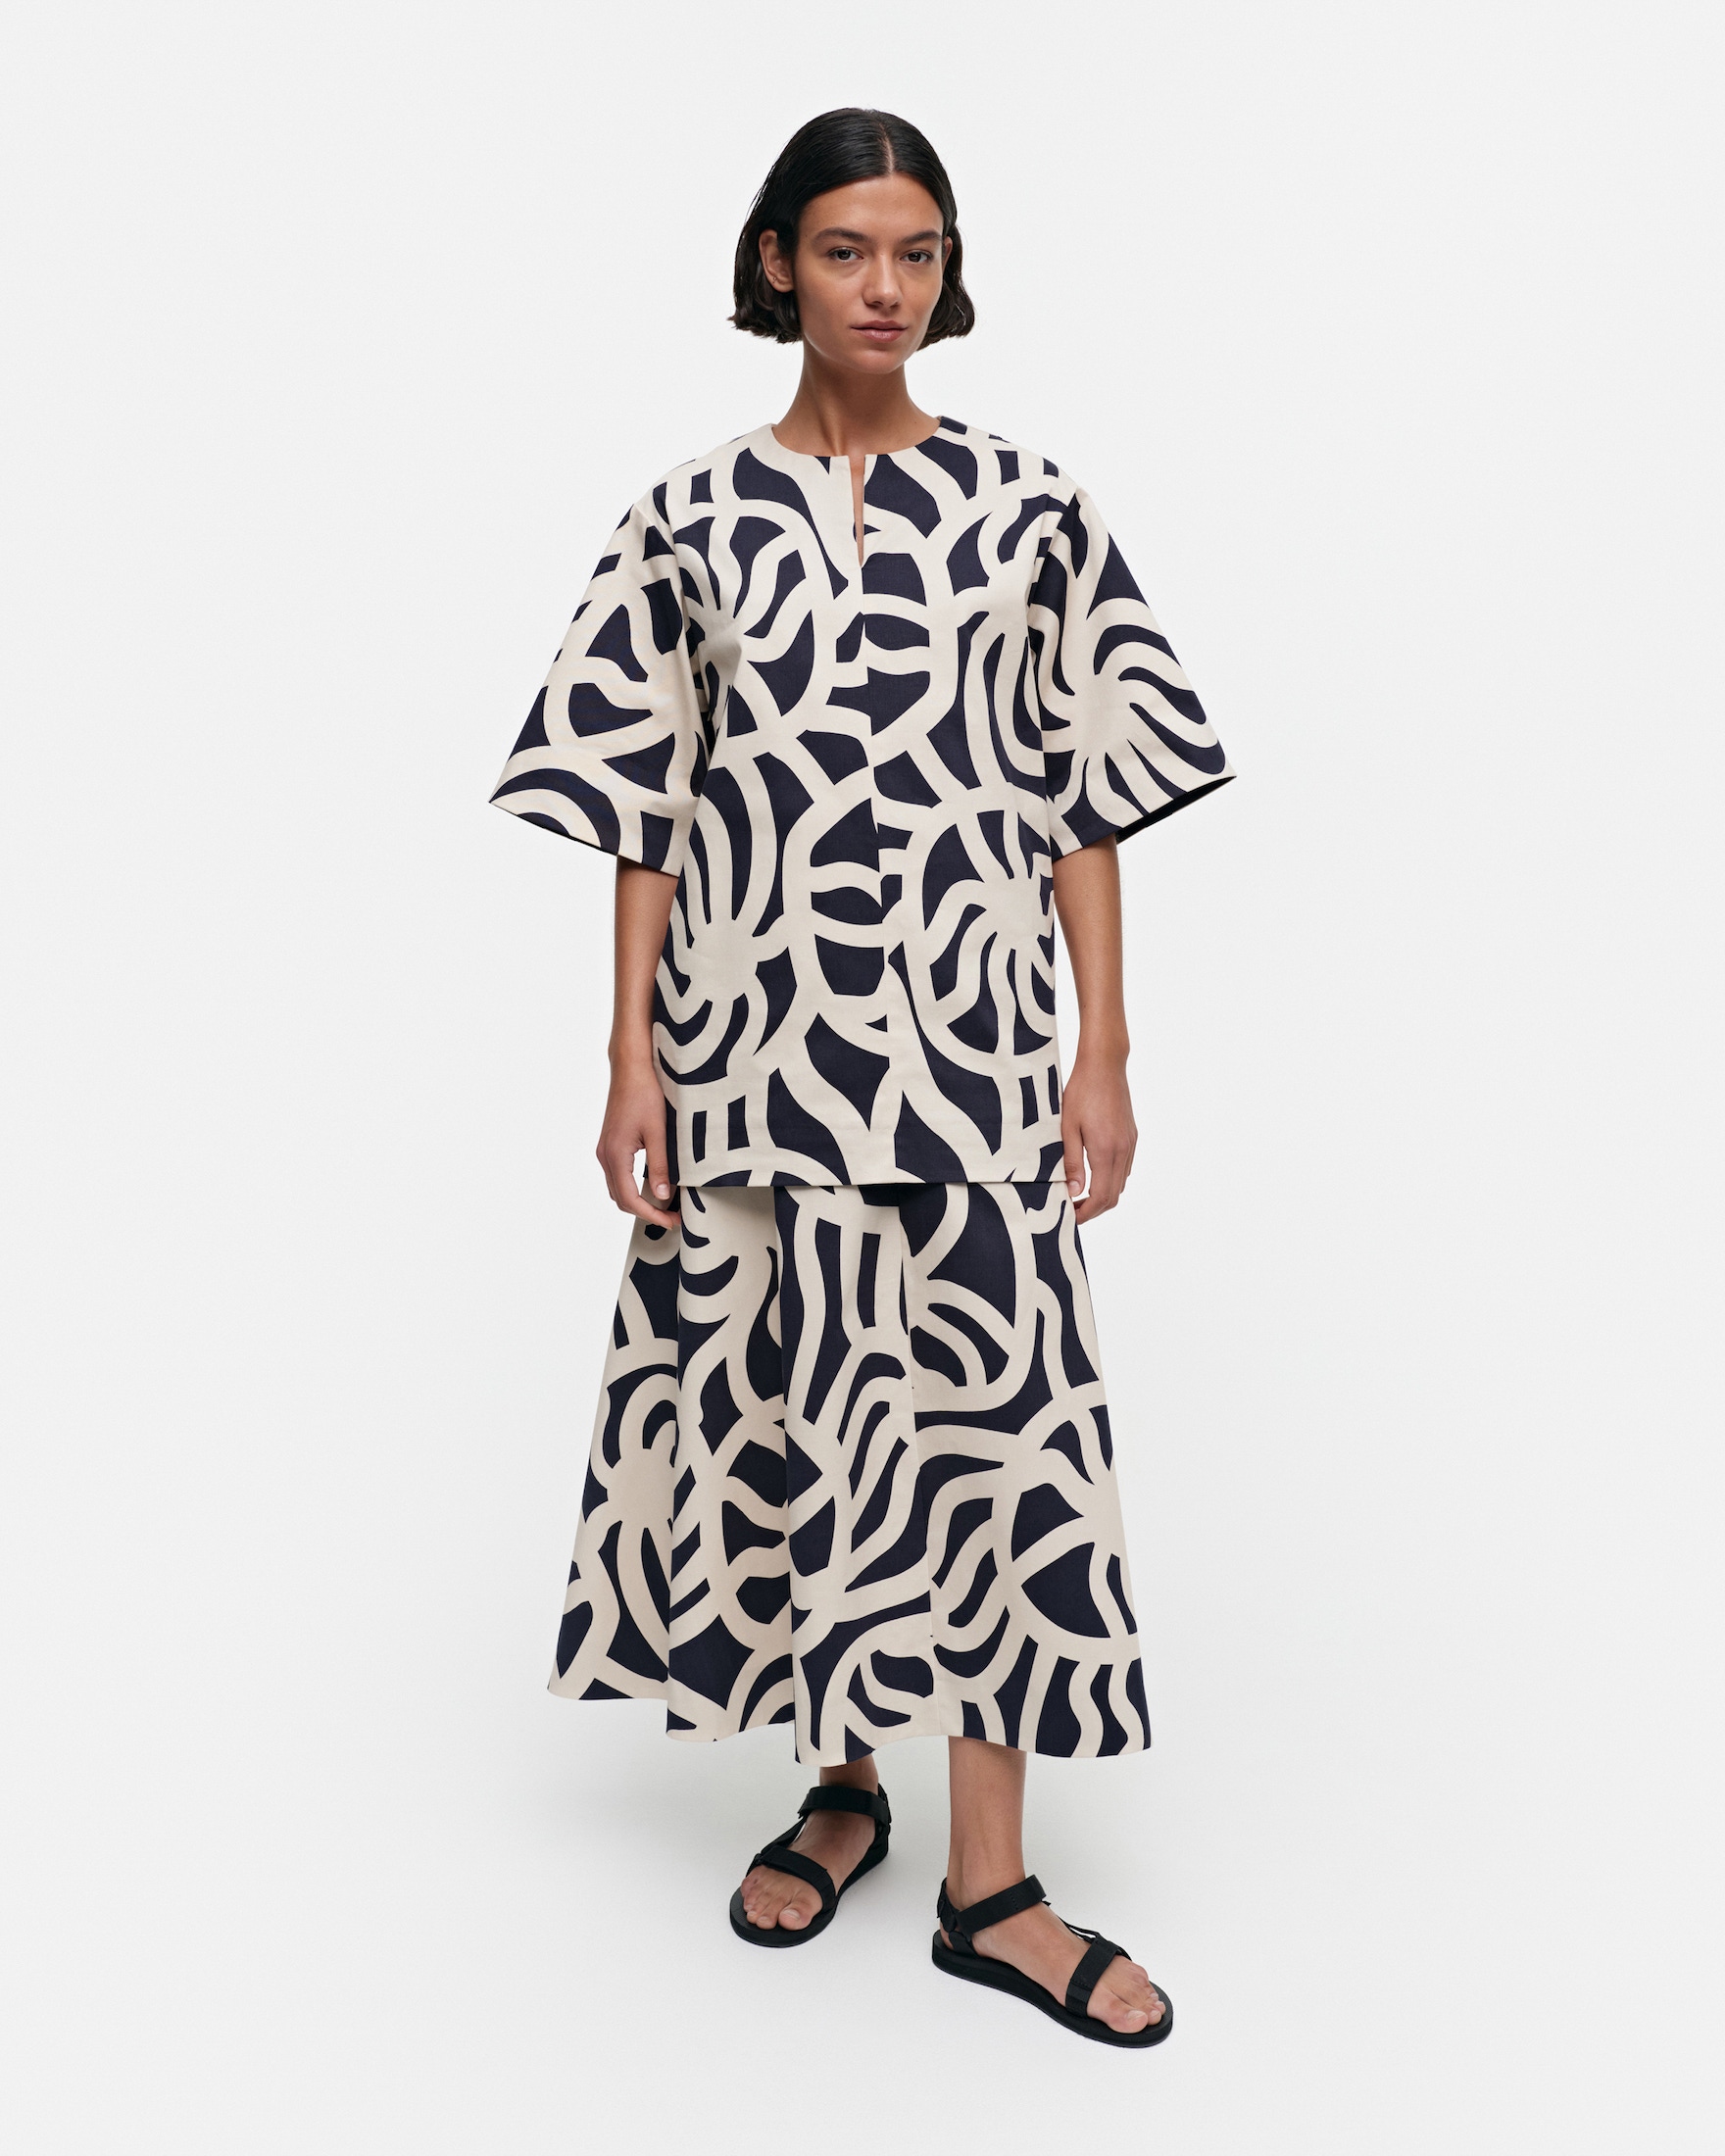 Marimekko Fashion 🇫🇮 Joonas Collection – Spring 2023